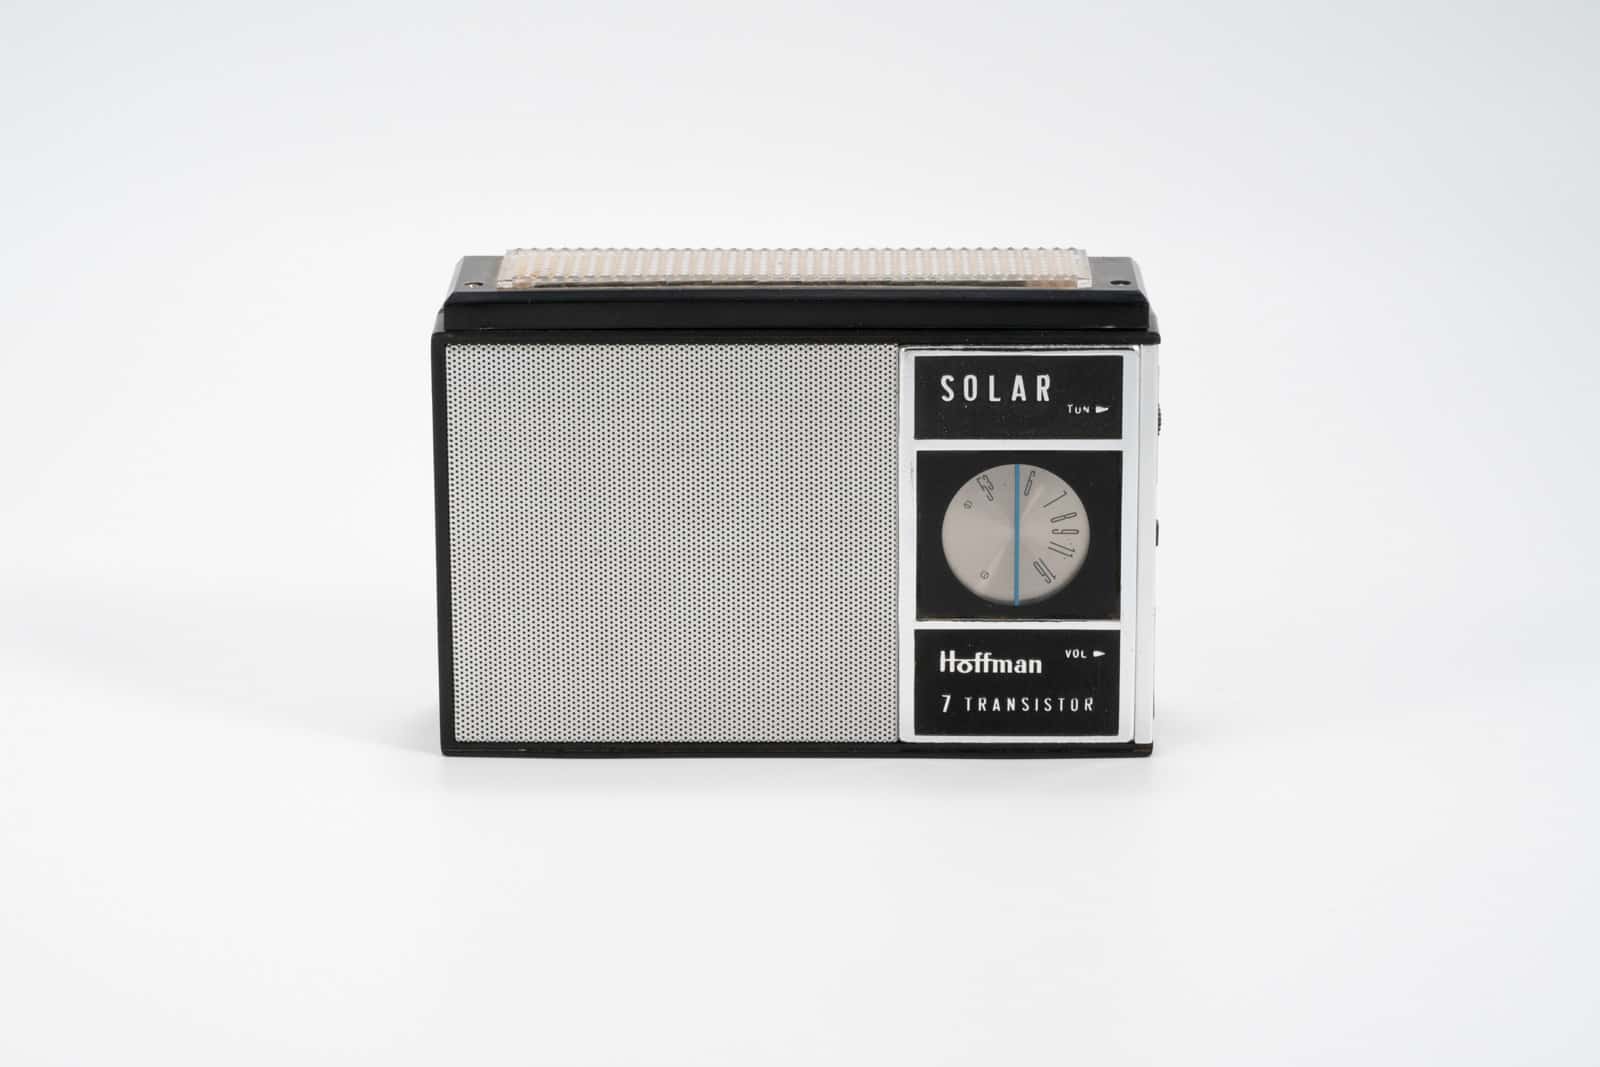 Hoffman 719 Solar Radio